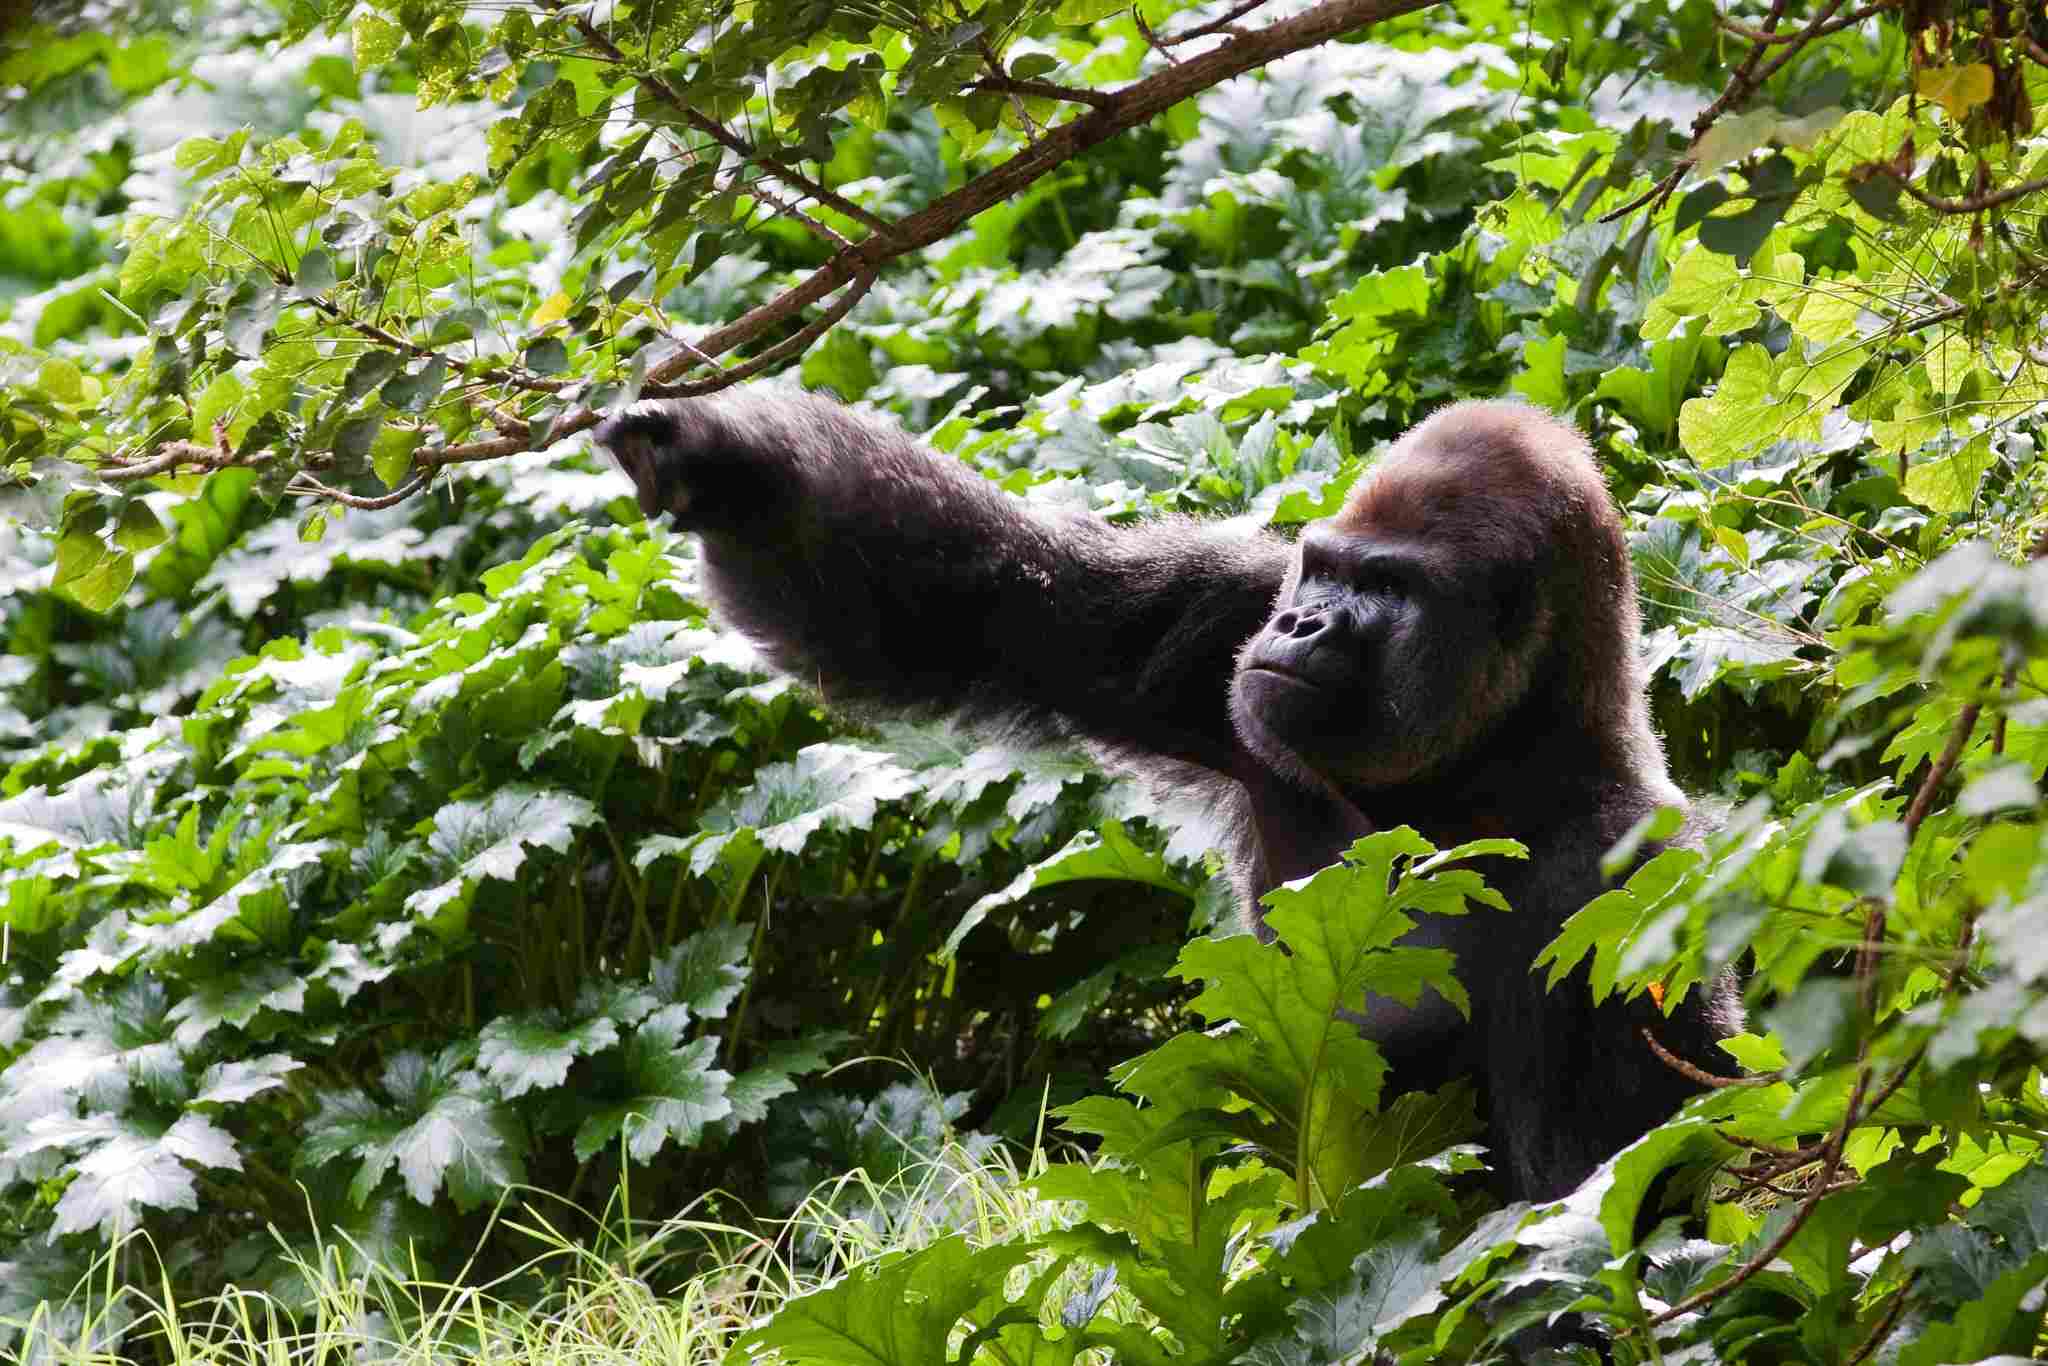 Hippo Vs Gorilla: Habitat Fragmentation and Degradation Affect Gorillas in the Wild (Credit: Richard Ashurst 2010 .CC BY 2.0.)